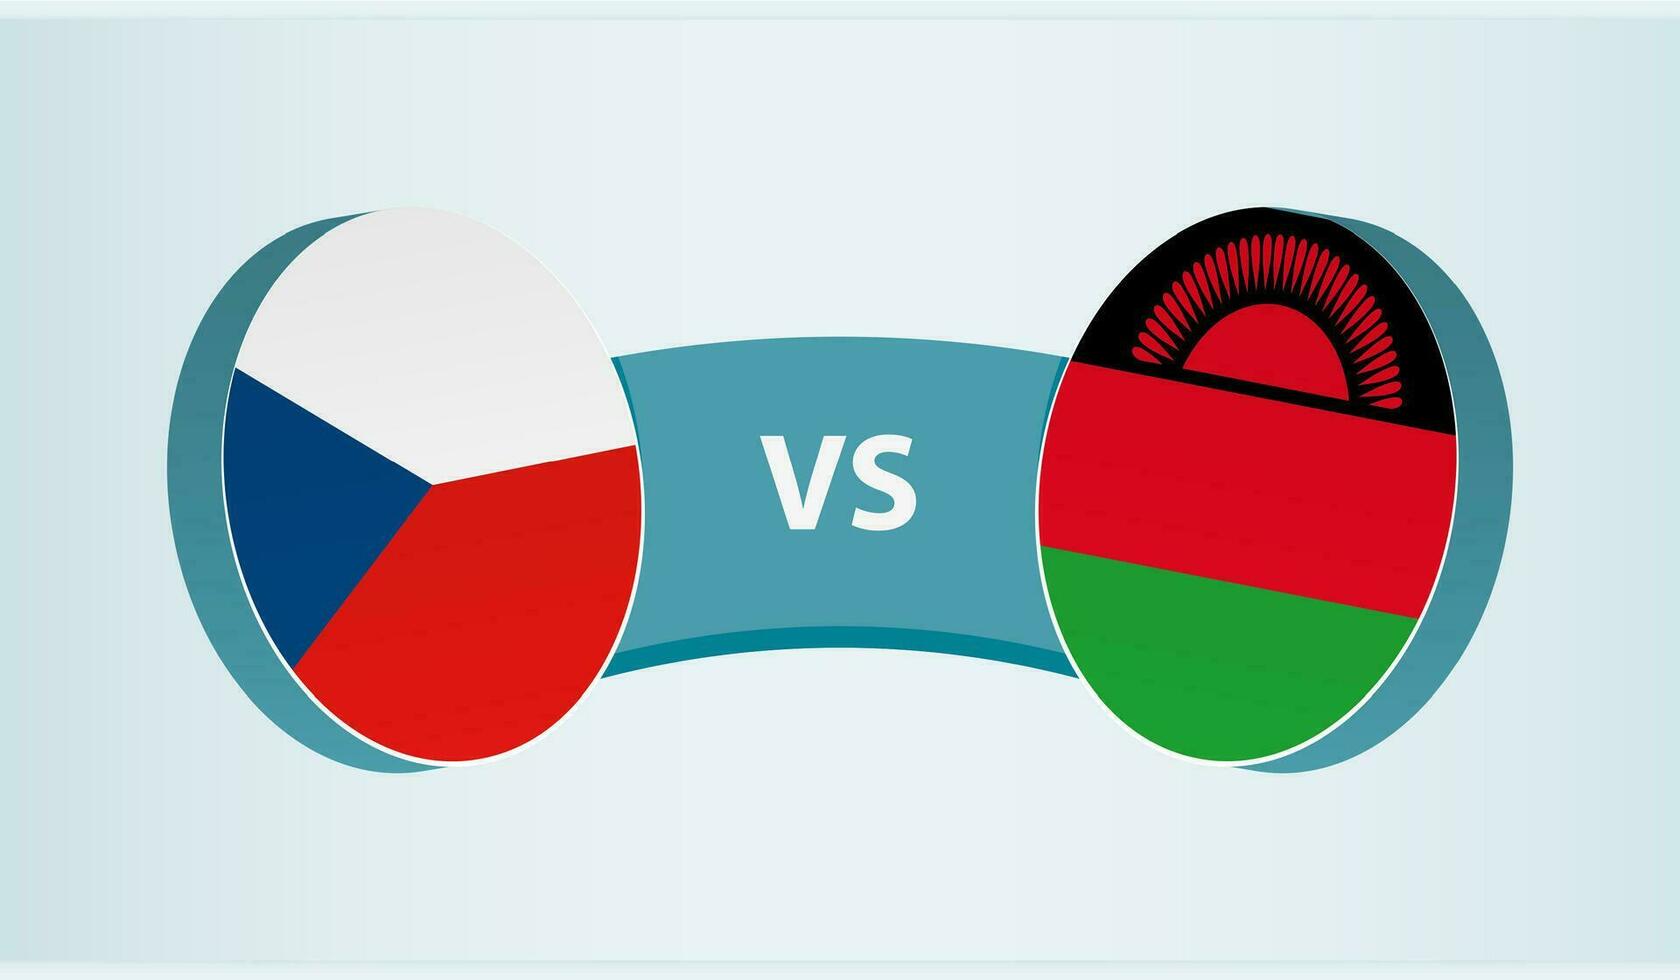 Czech Republic versus Malawi, team sports competition concept. vector